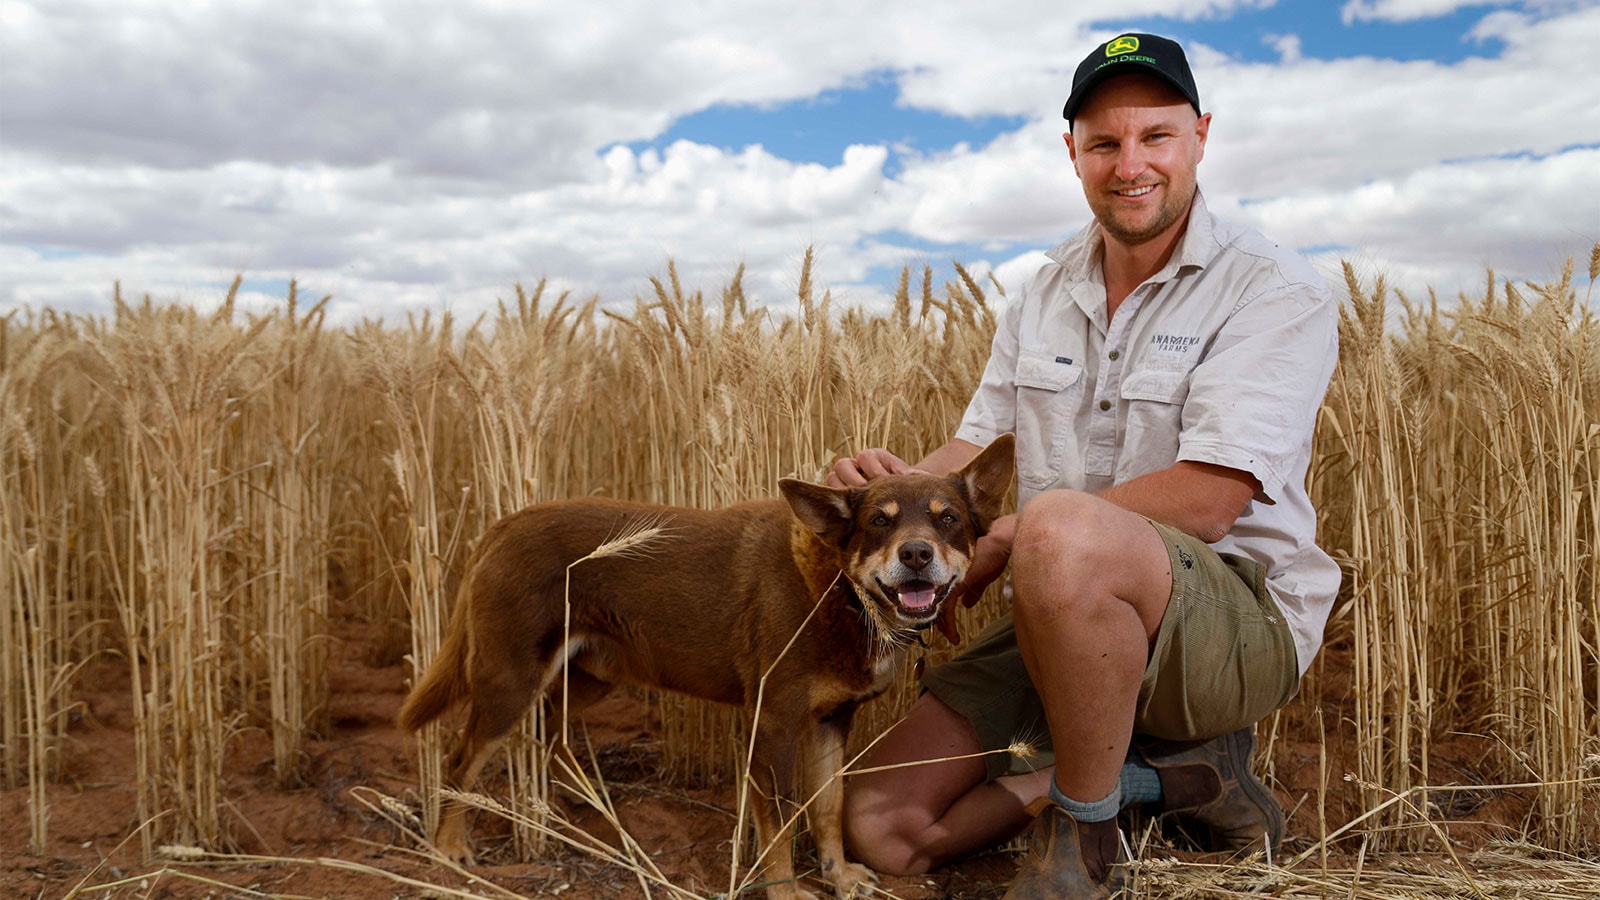 Oscar York, WA farmer, with his dog in wheat field.